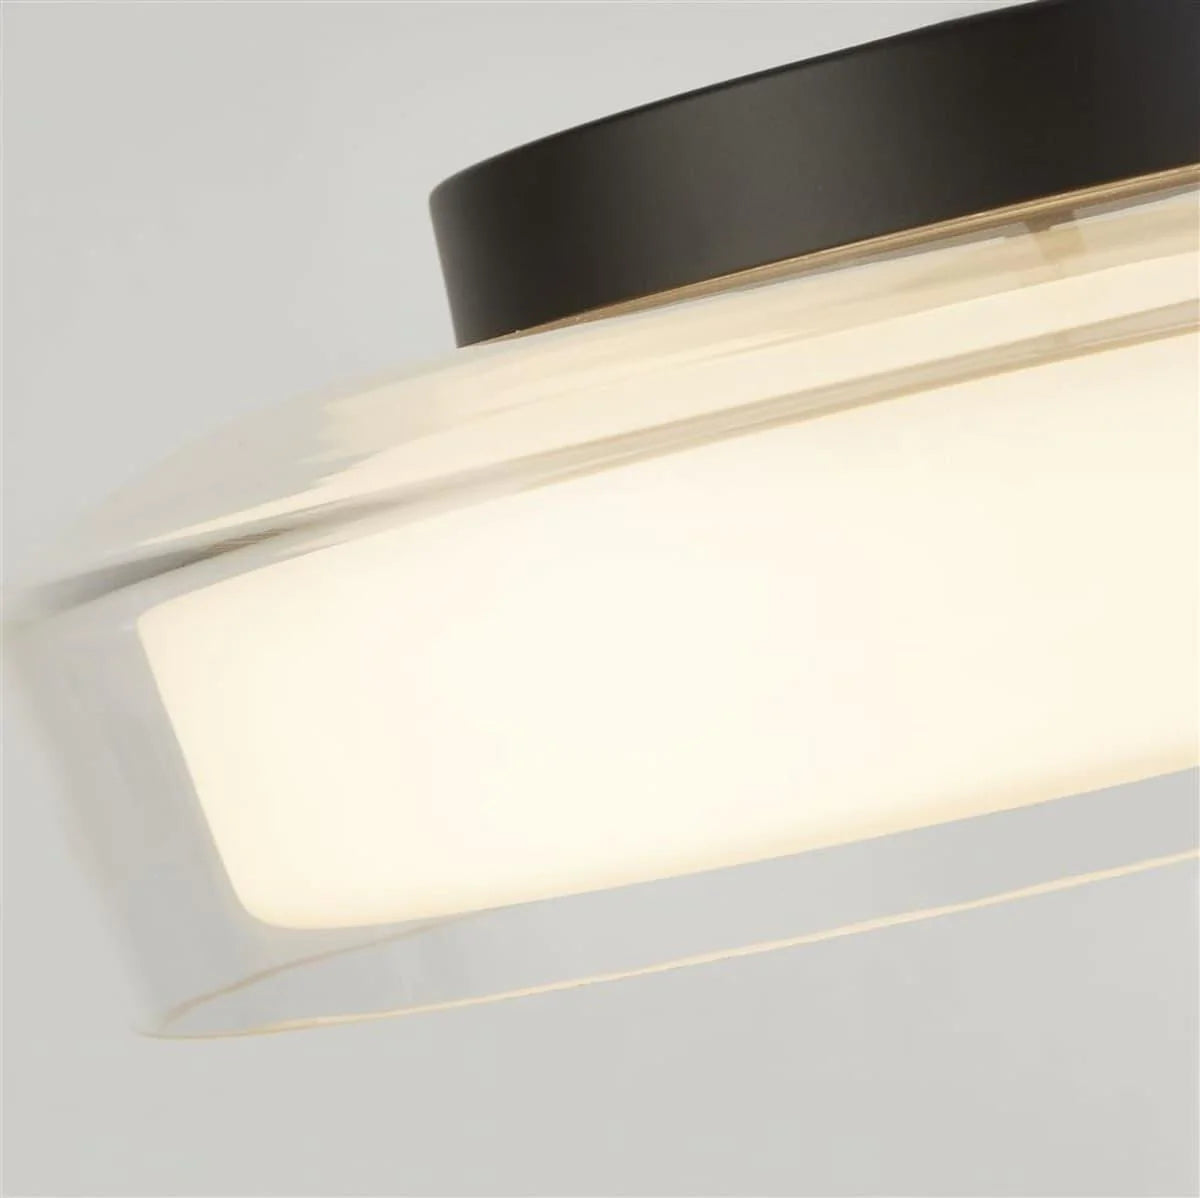 PUCK FLUSH BATHROOM CEILING LIGHT - BLACK METAL & OPAL, IP44 60961BK - Peter Murphy Lighting & Electrical Ltd